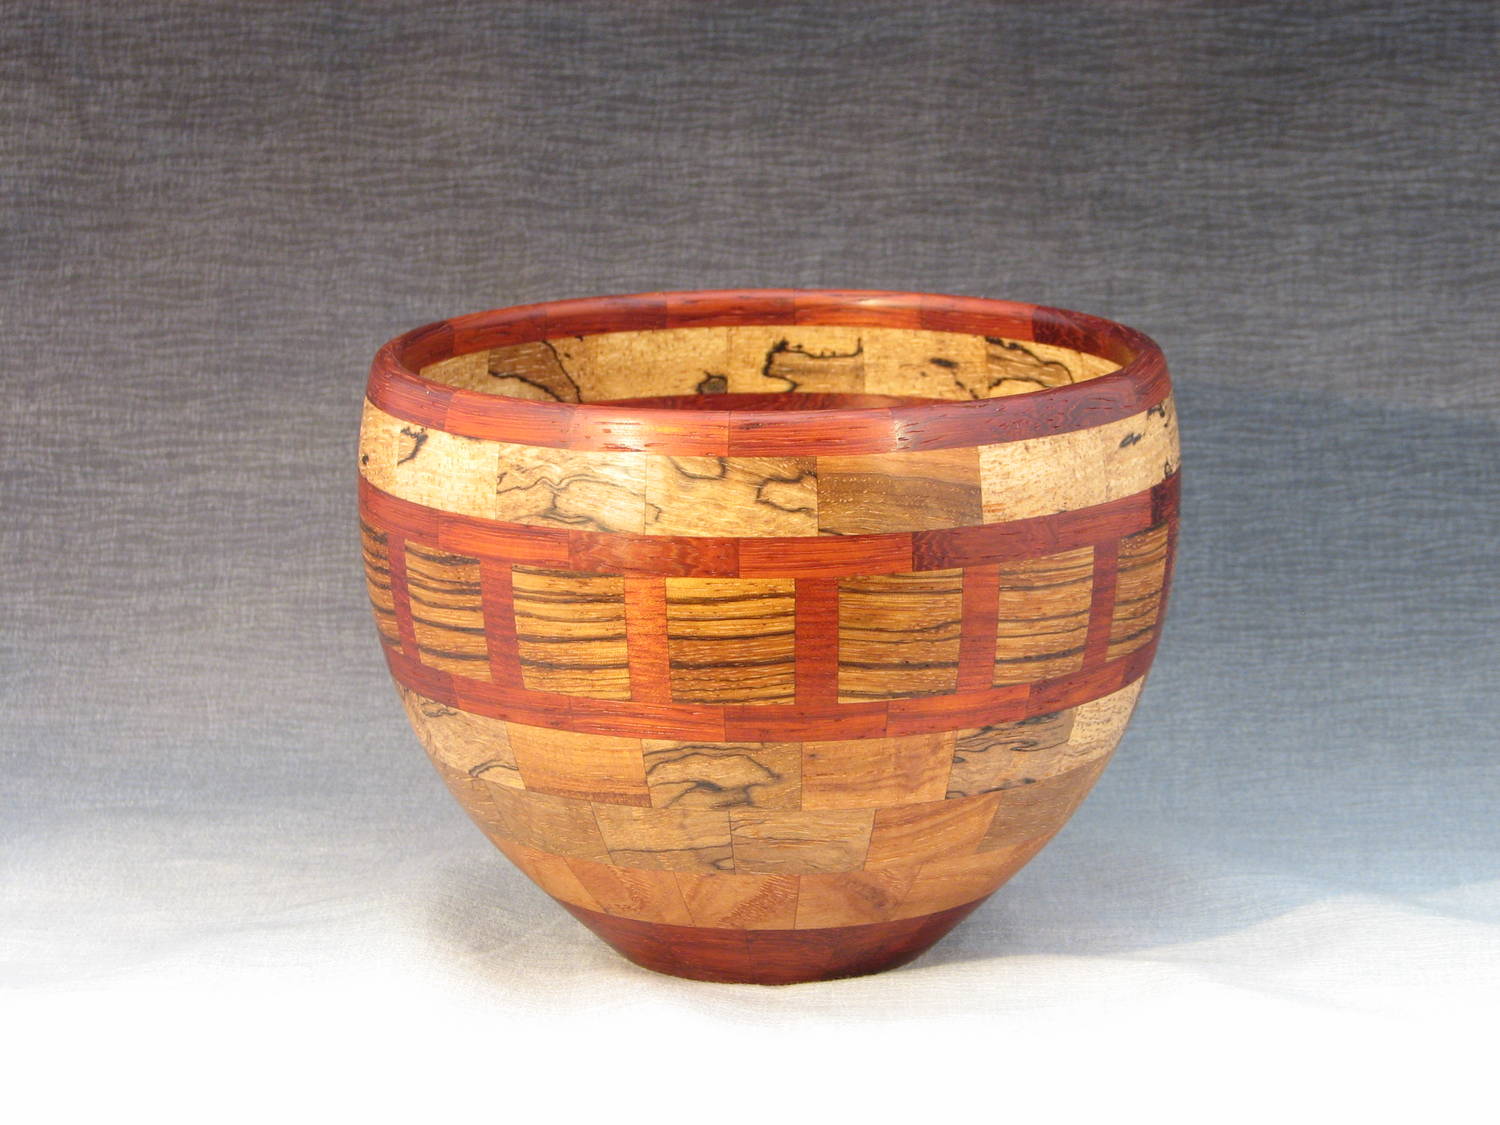 Segmented Bowl for woodturning club gift exchange